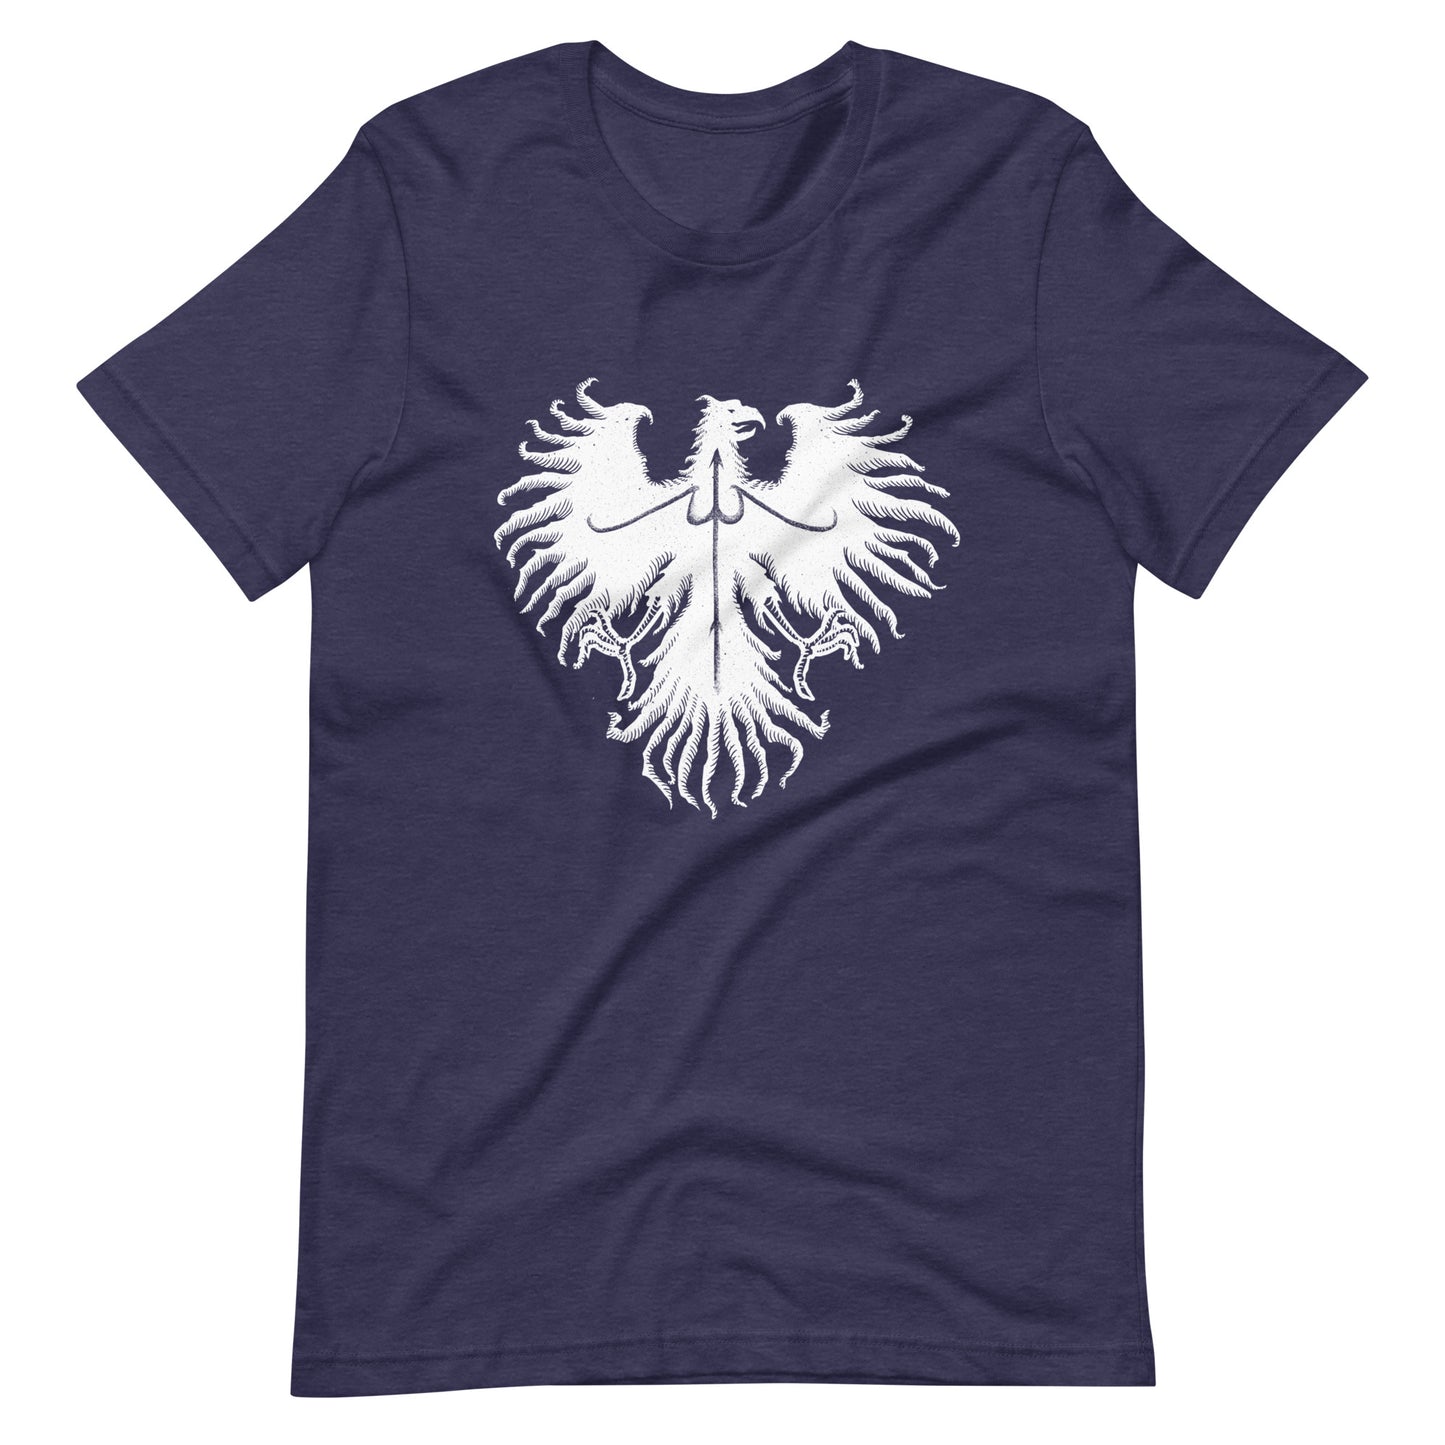 Black Eagle - Men's t-shirt - Heather Midnight Navy Front